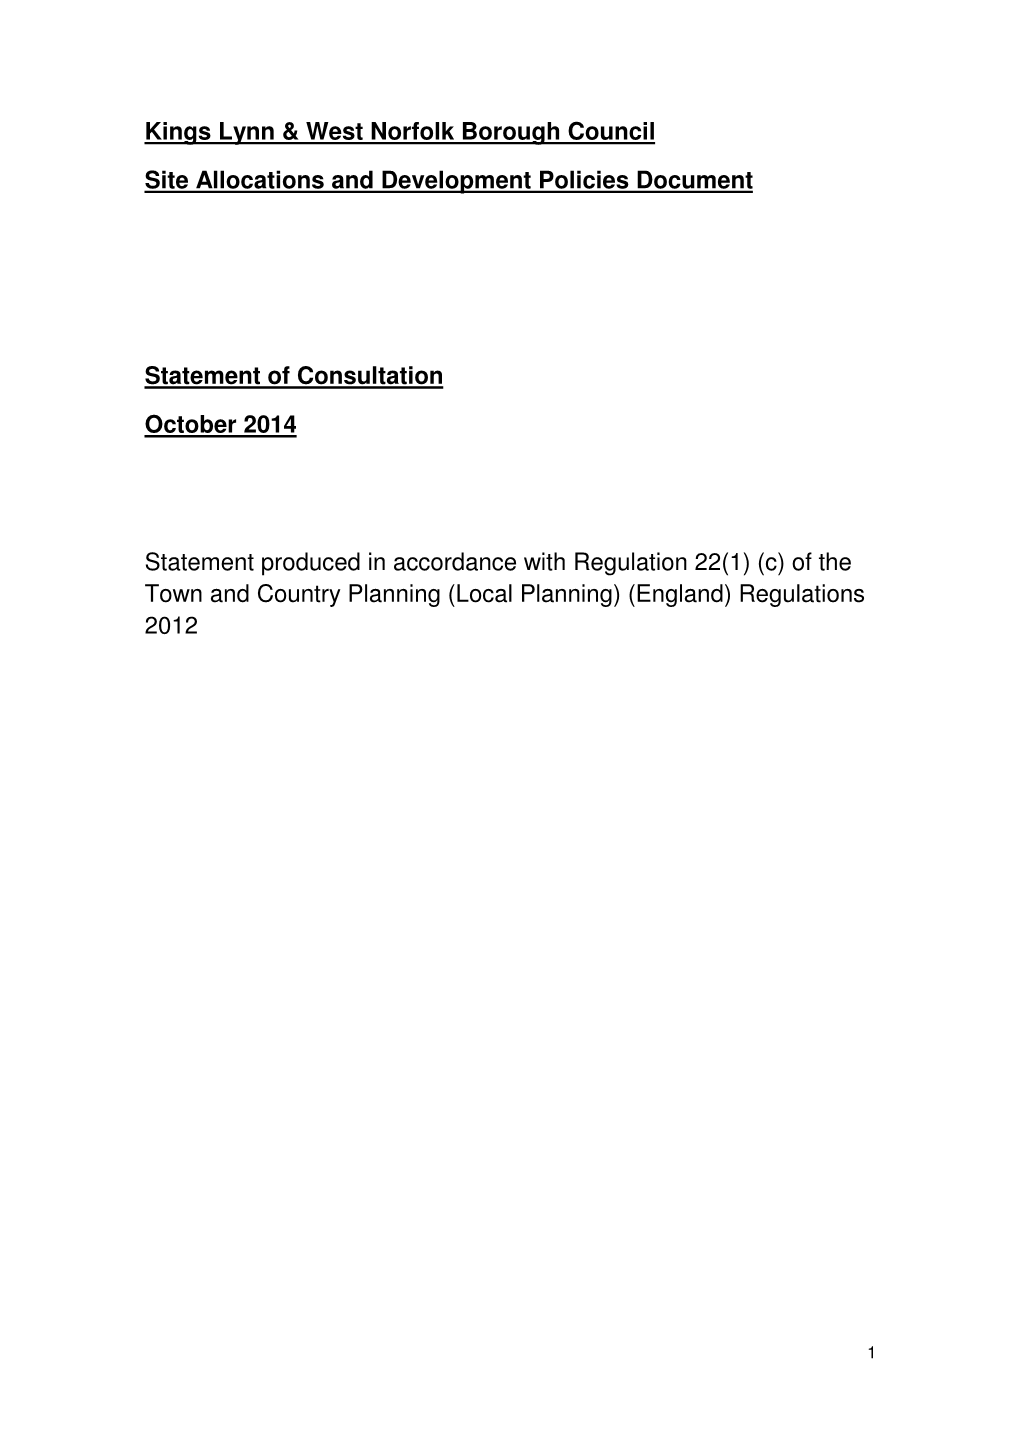 Statement of Consultation (October 2015)